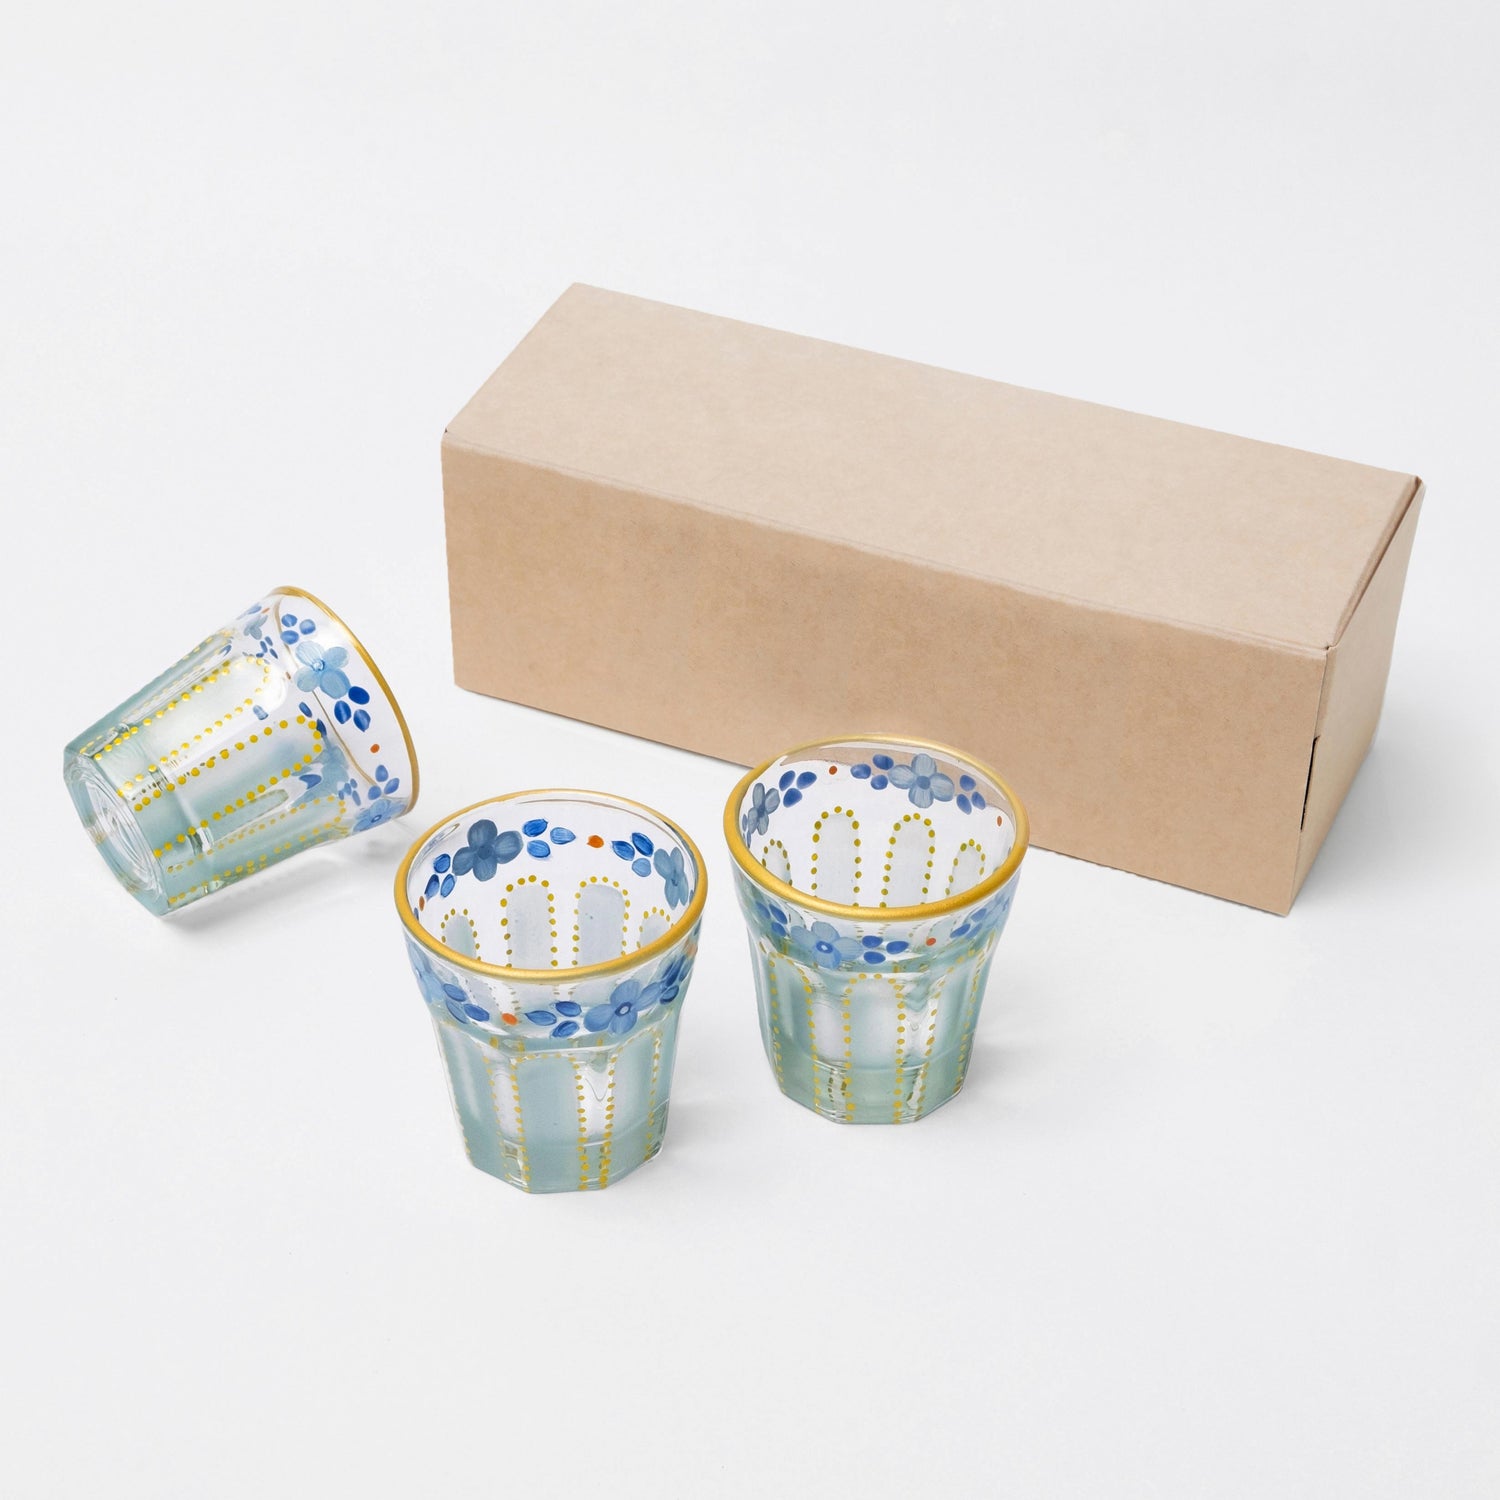 Three Nile blue shot glasses next to a kraft packaging box